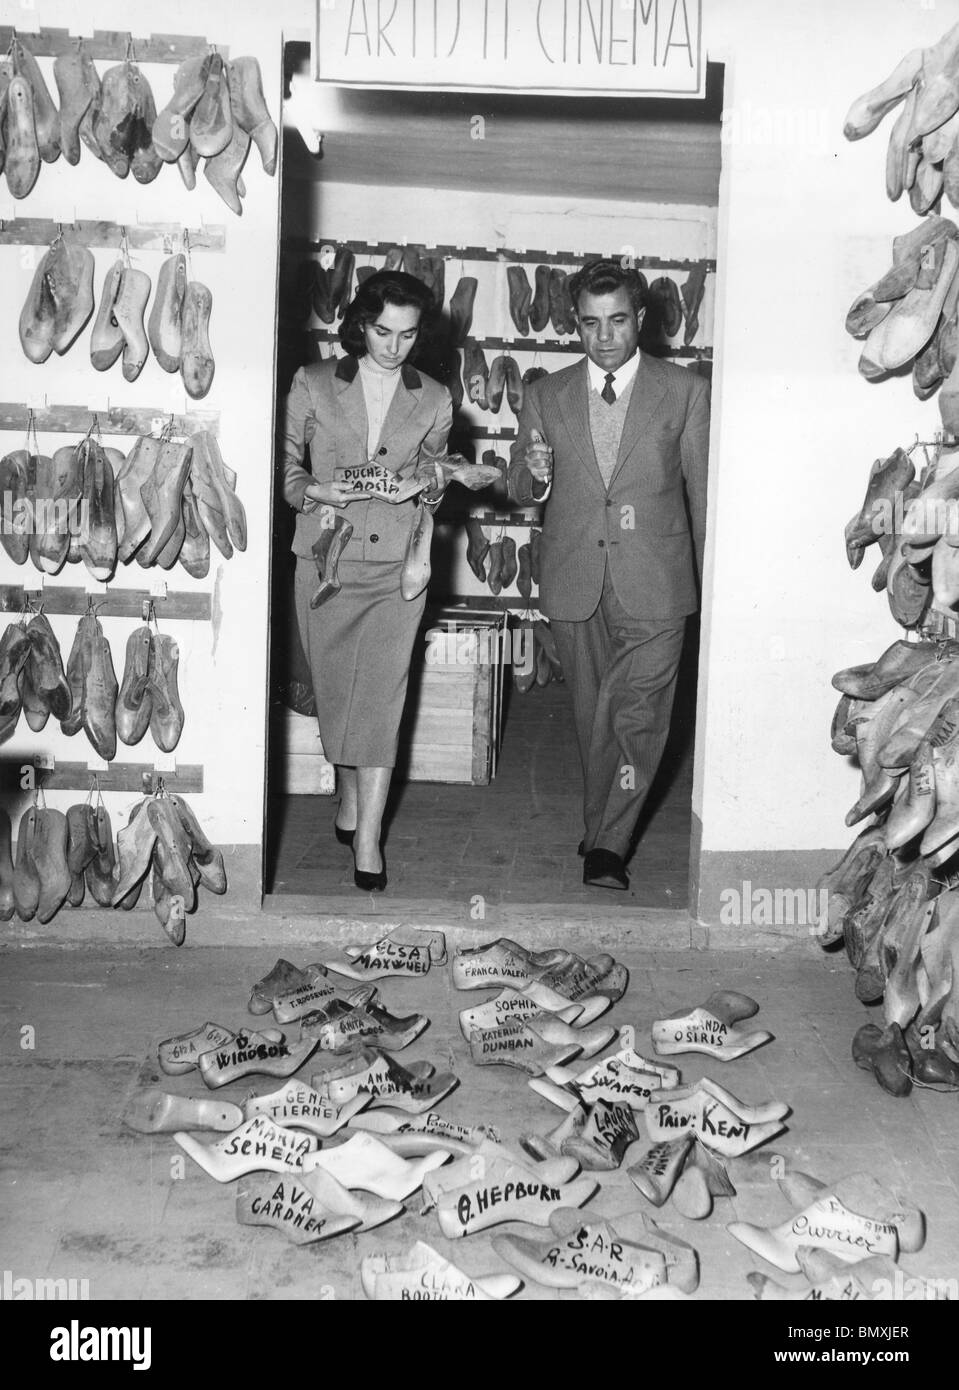 SALVATORE FERRAGAMO (1898-1960) Italian shoe designer at his Via Manelli workshop in Florence about 1955 Stock Photo